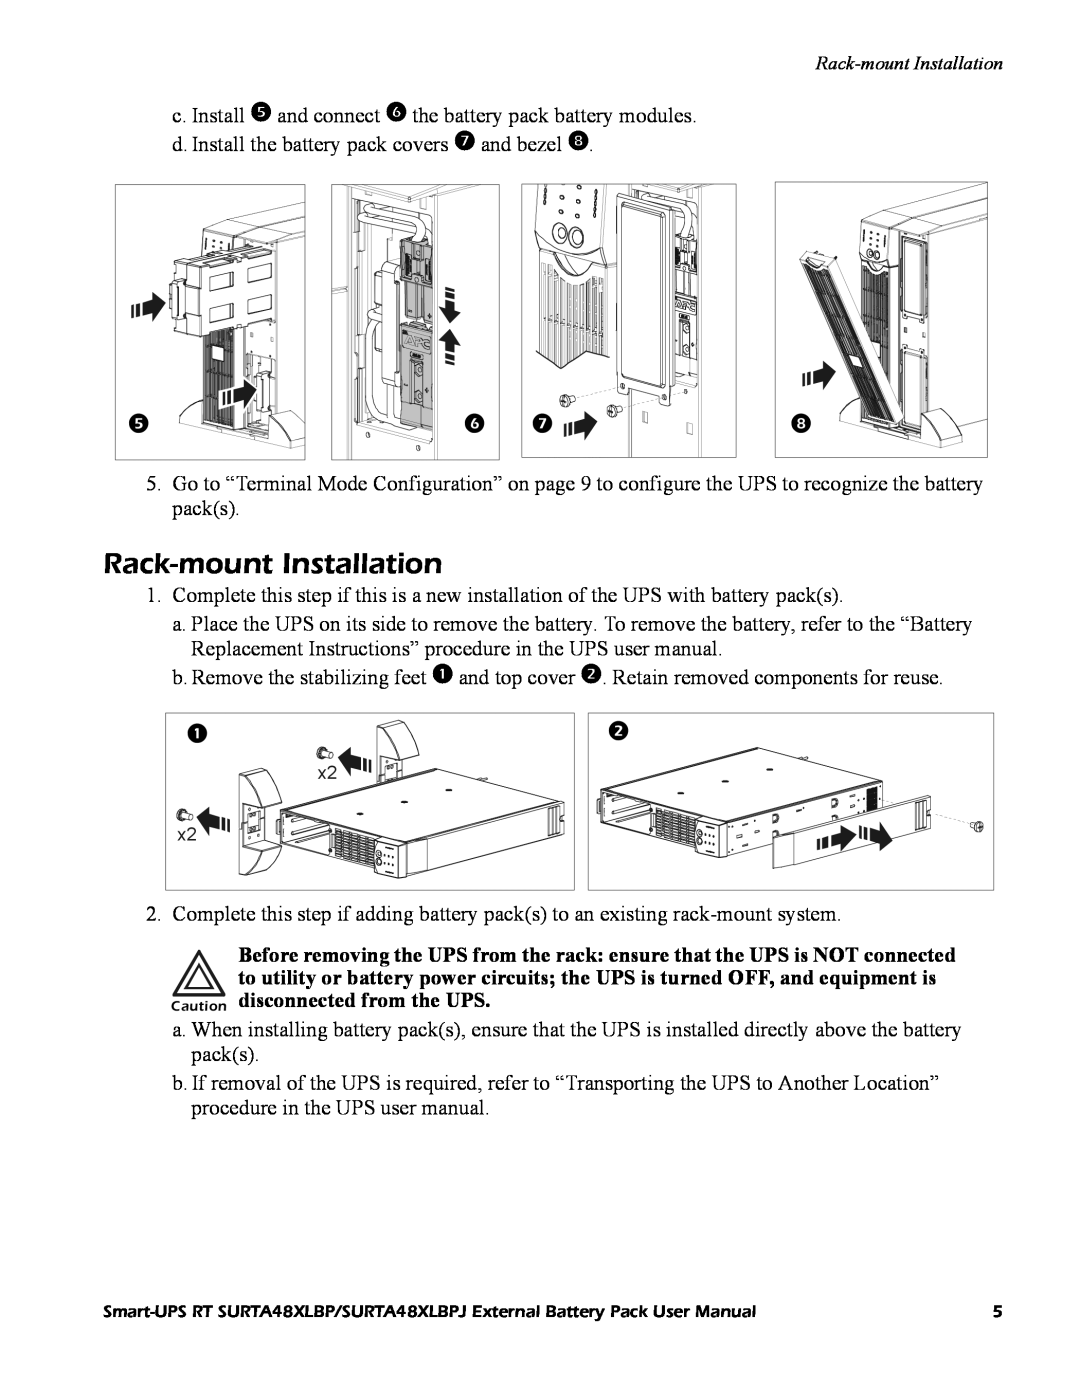 APC URTA48XLBPJ, RT SURTA48XLBP user manual Rack-mount Installation, Caution disconnected from the UPS 